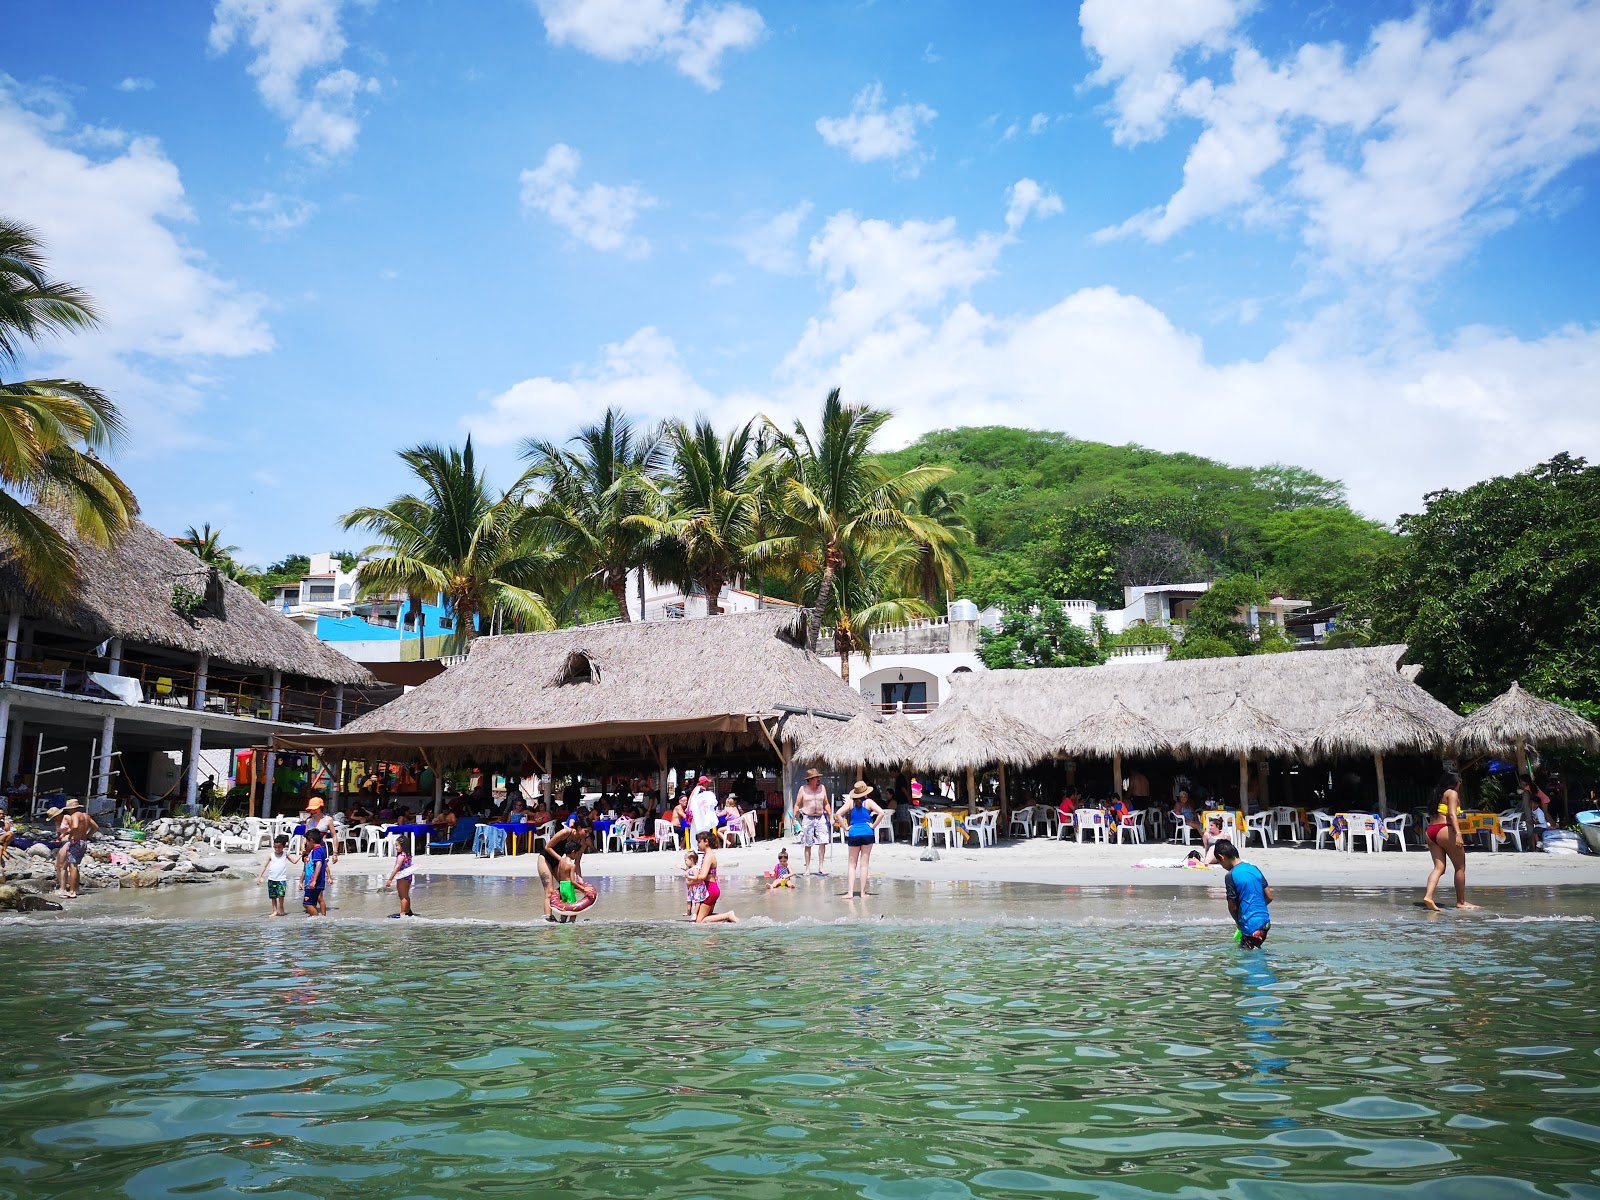 Fotografija Manzanilla beach dobro mesto, prijazno za hišne ljubljenčke za počitnice